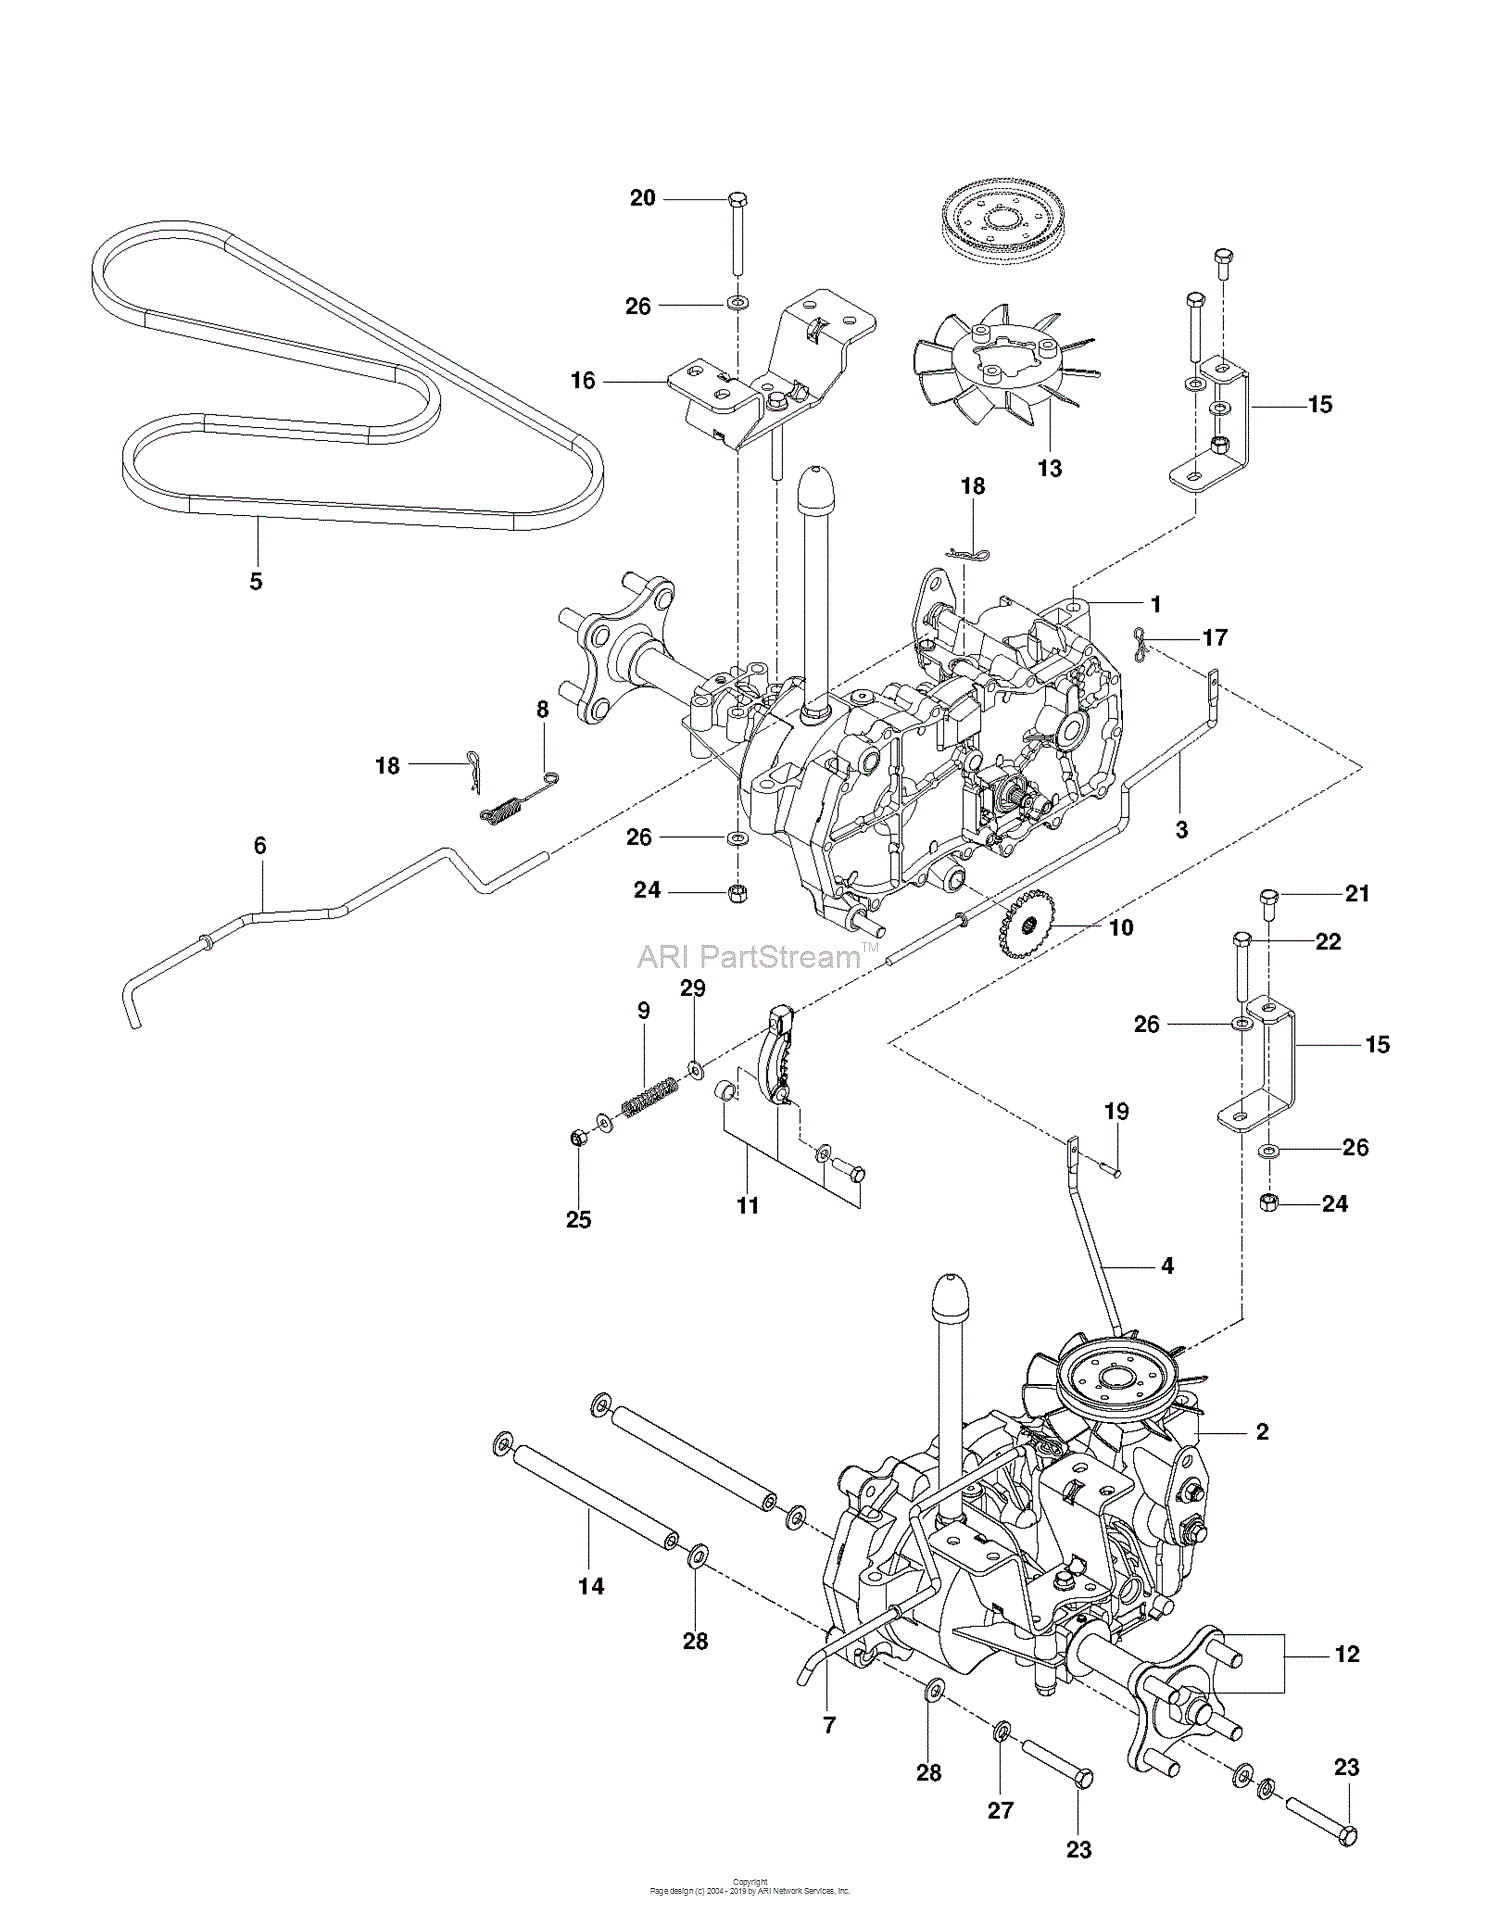 Parts Diagram For Hydraulic Pump Motor